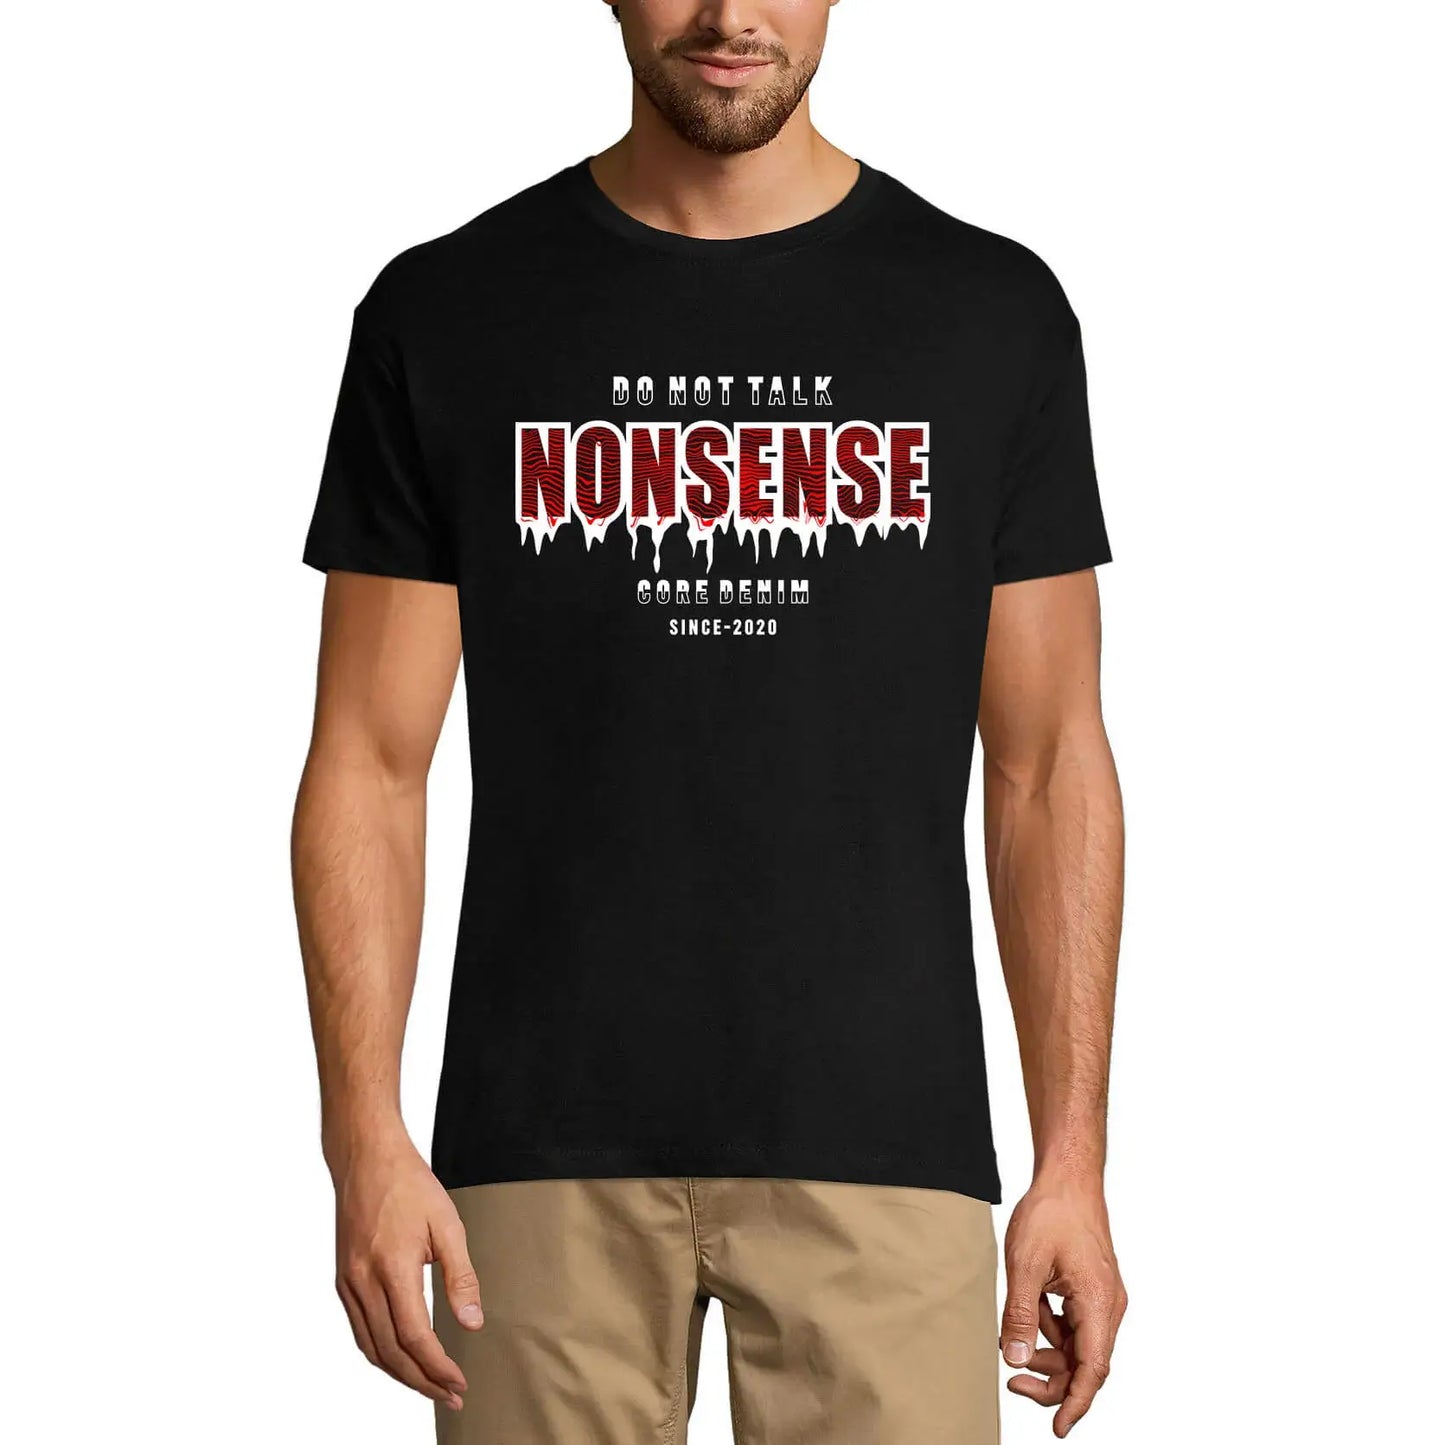 Men's Graphic T-Shirt Do Not Talk Nonsense Eco-Friendly Limited Edition Short Sleeve Tee-Shirt Vintage Birthday Gift Novelty